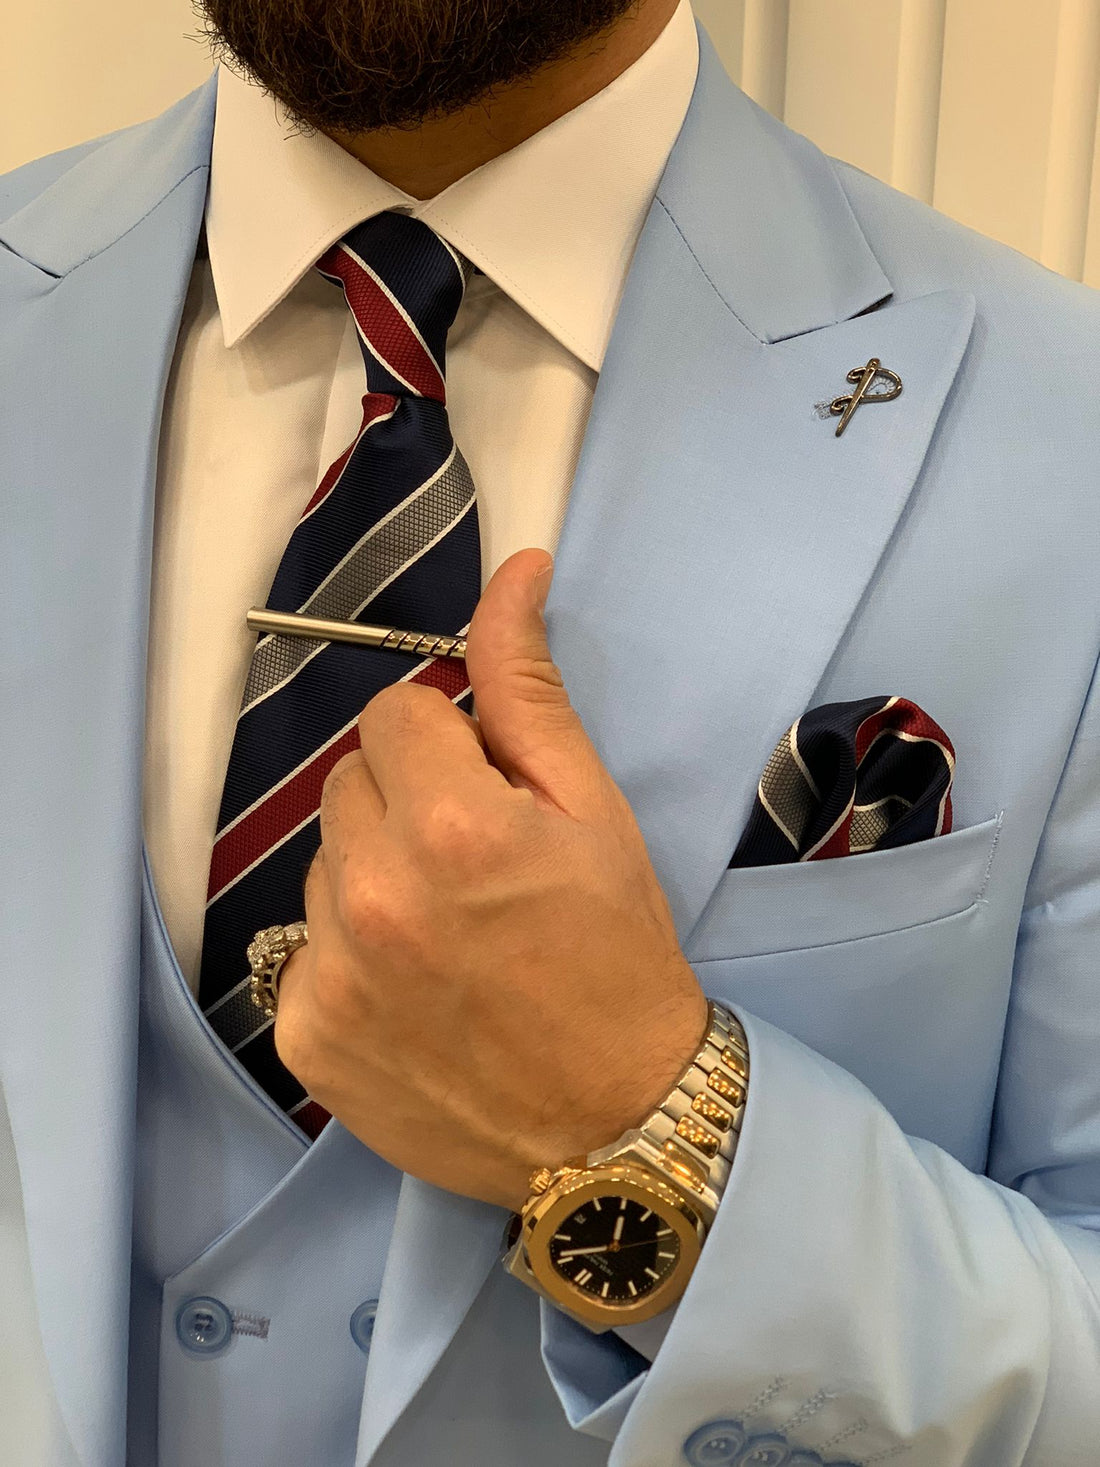 Light Blue Slim-Fit Italian Cut Suit